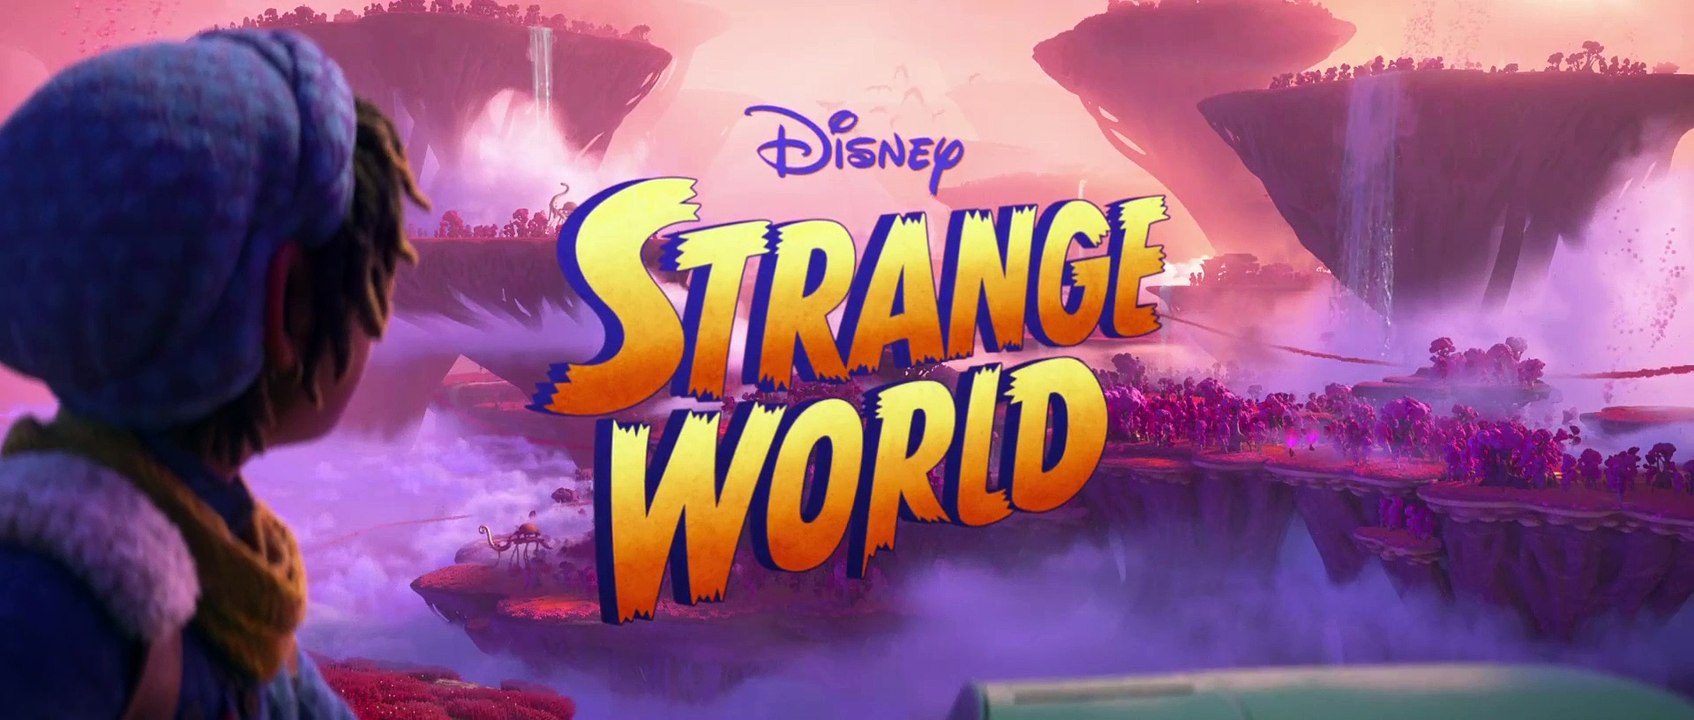 Strange World : Teaser du film d'animation des studios Disney - VO - Vidéo Dailymotion